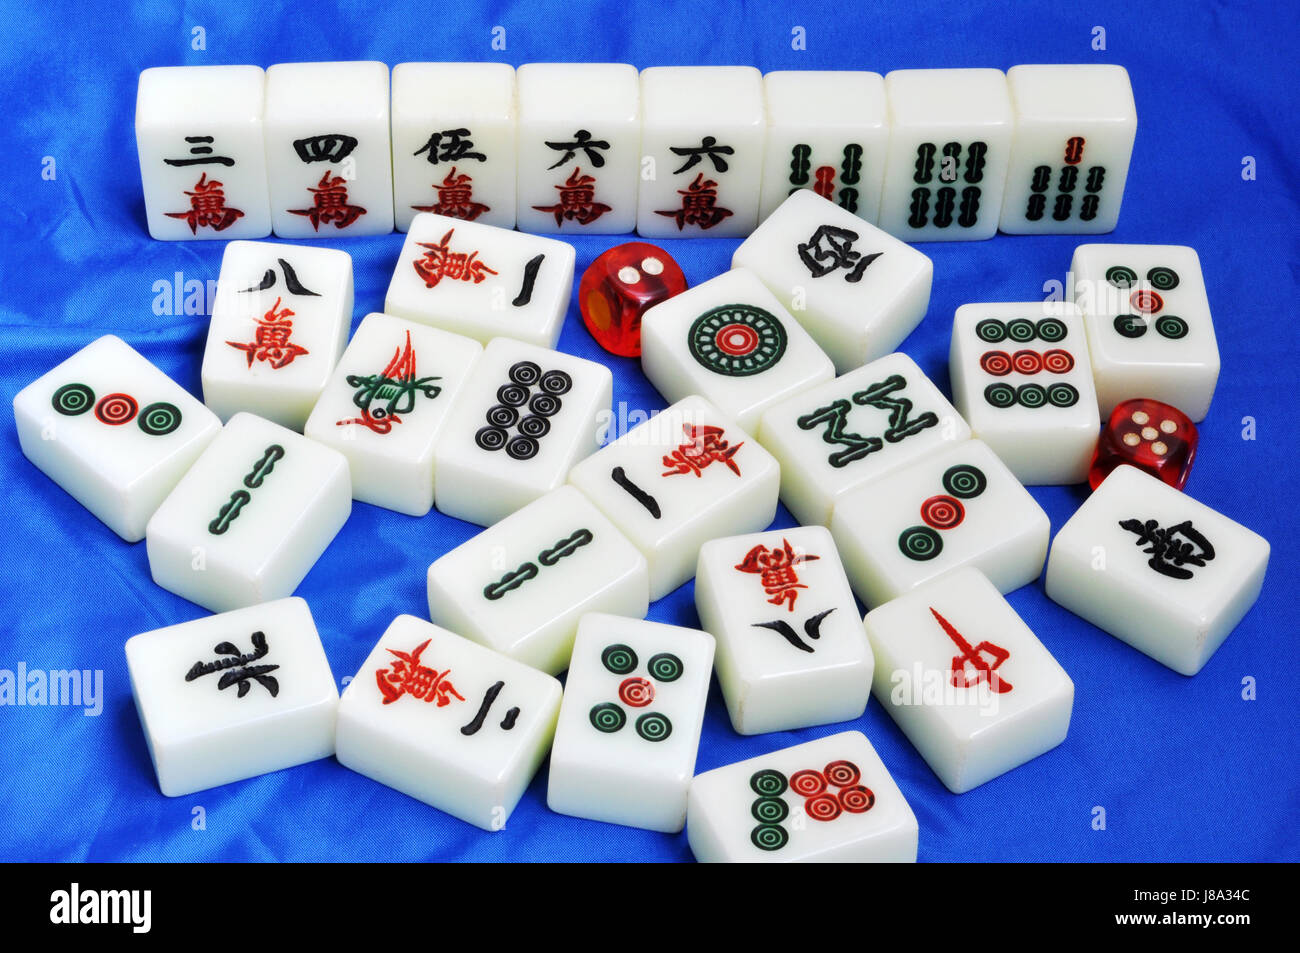 Fichas de mahjong gratis fotografías e imágenes de alta resolución - Alamy